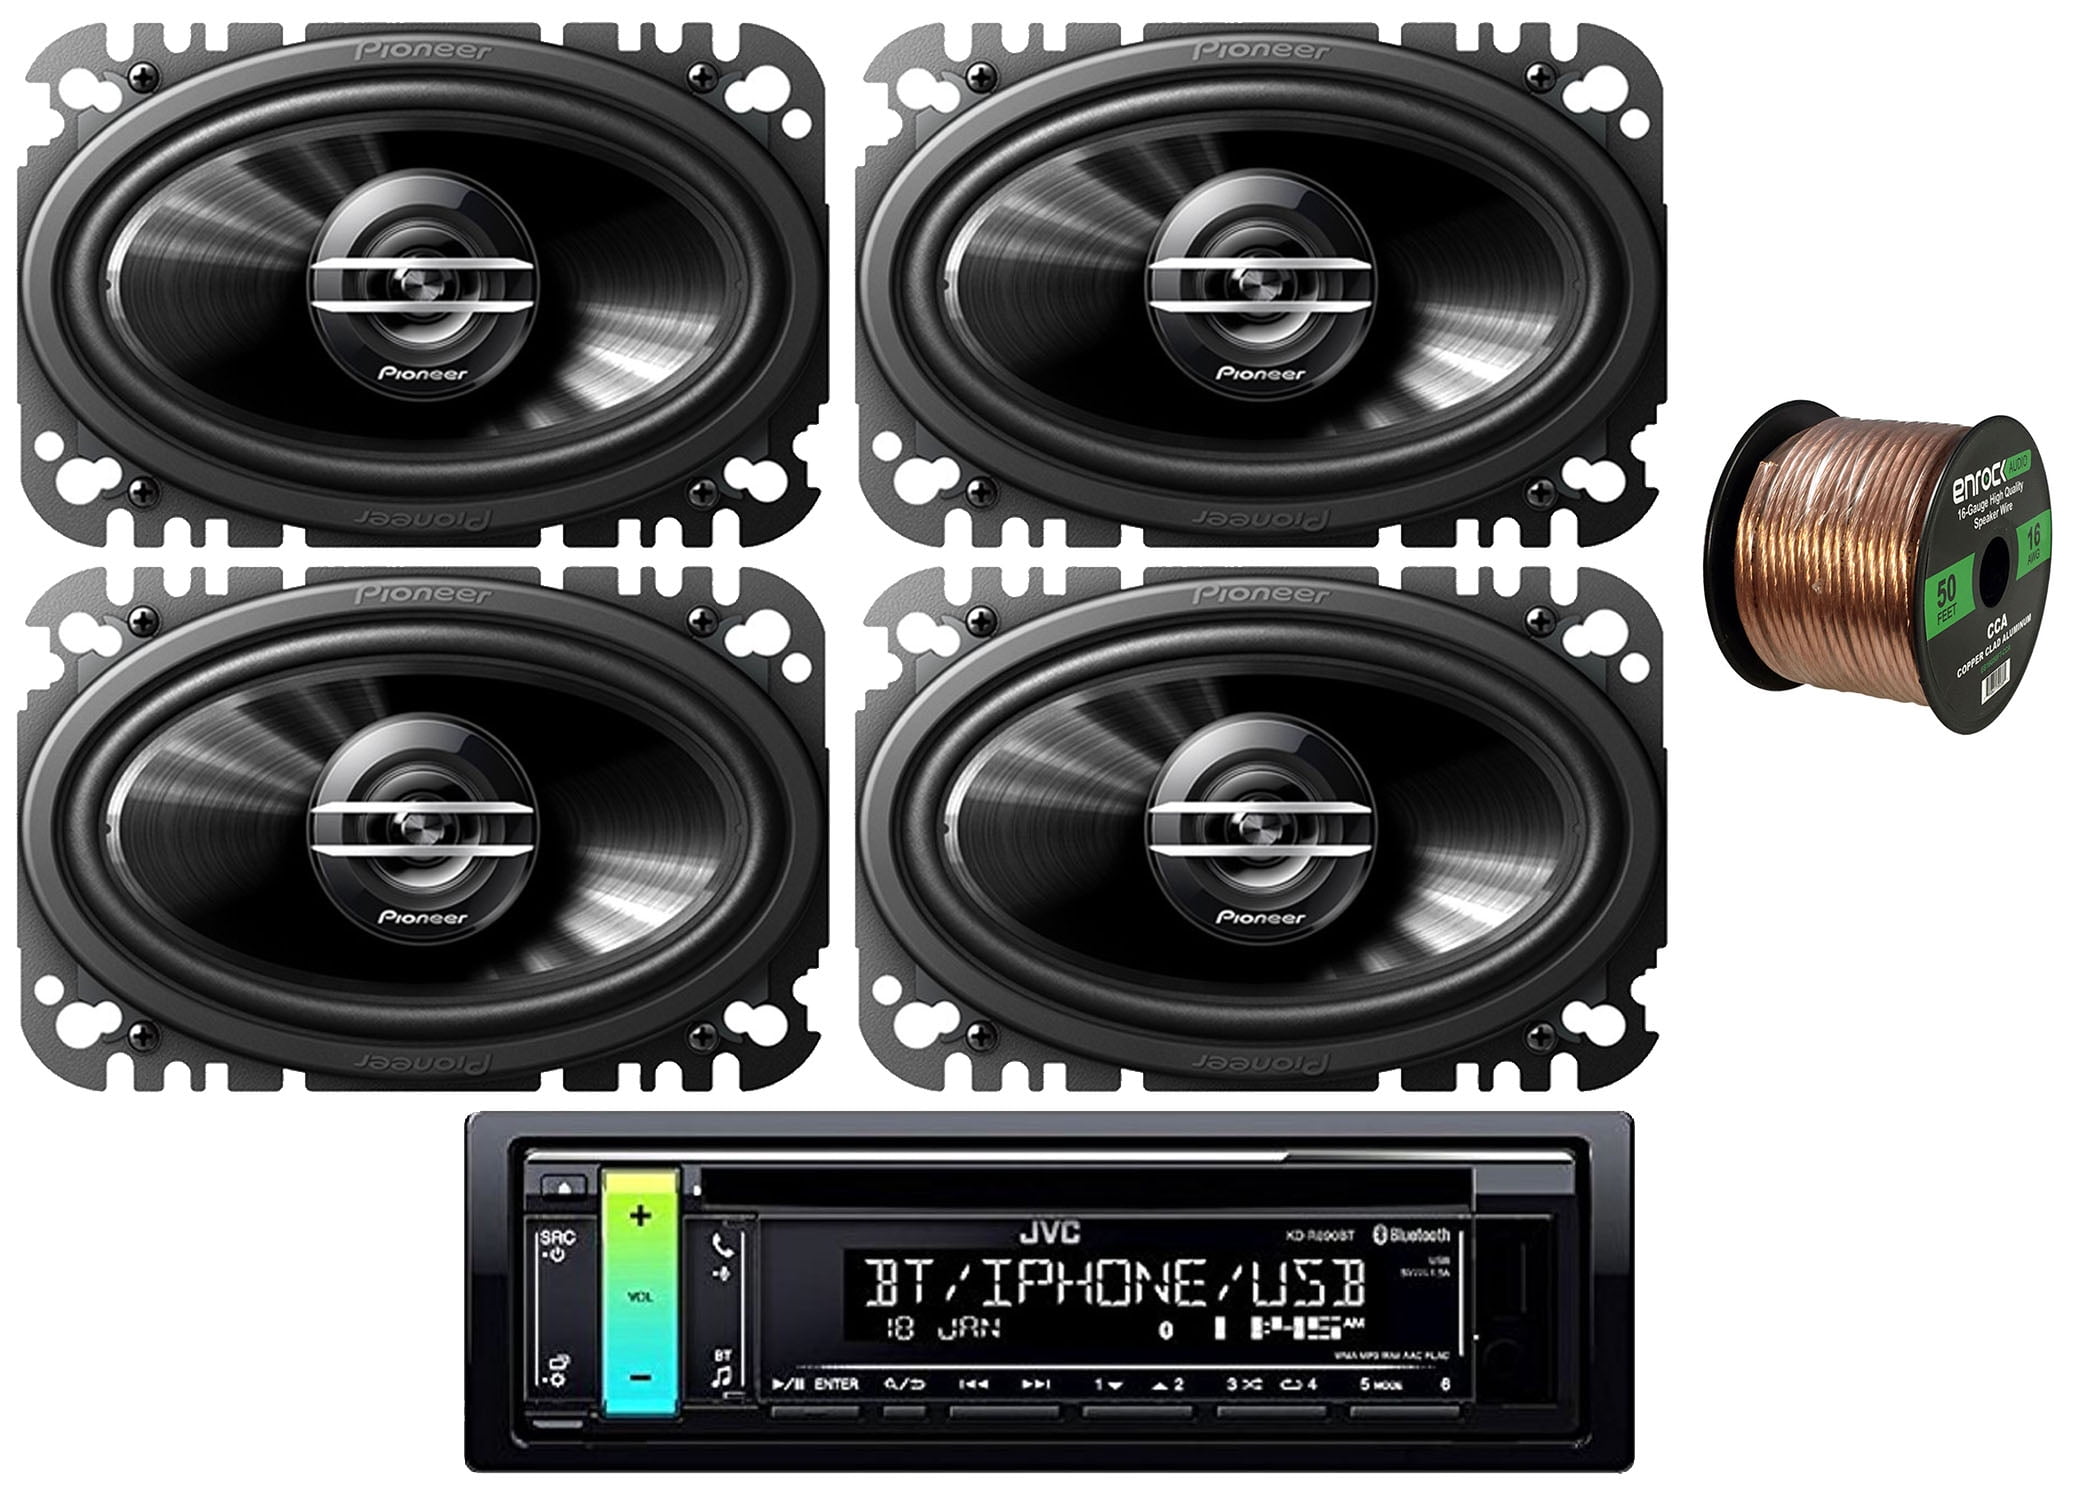 4x10" 400W Car Speakers Package NEW BOSS CH6520 6.5" 250W + 2 4x6" 250W + 2 2 